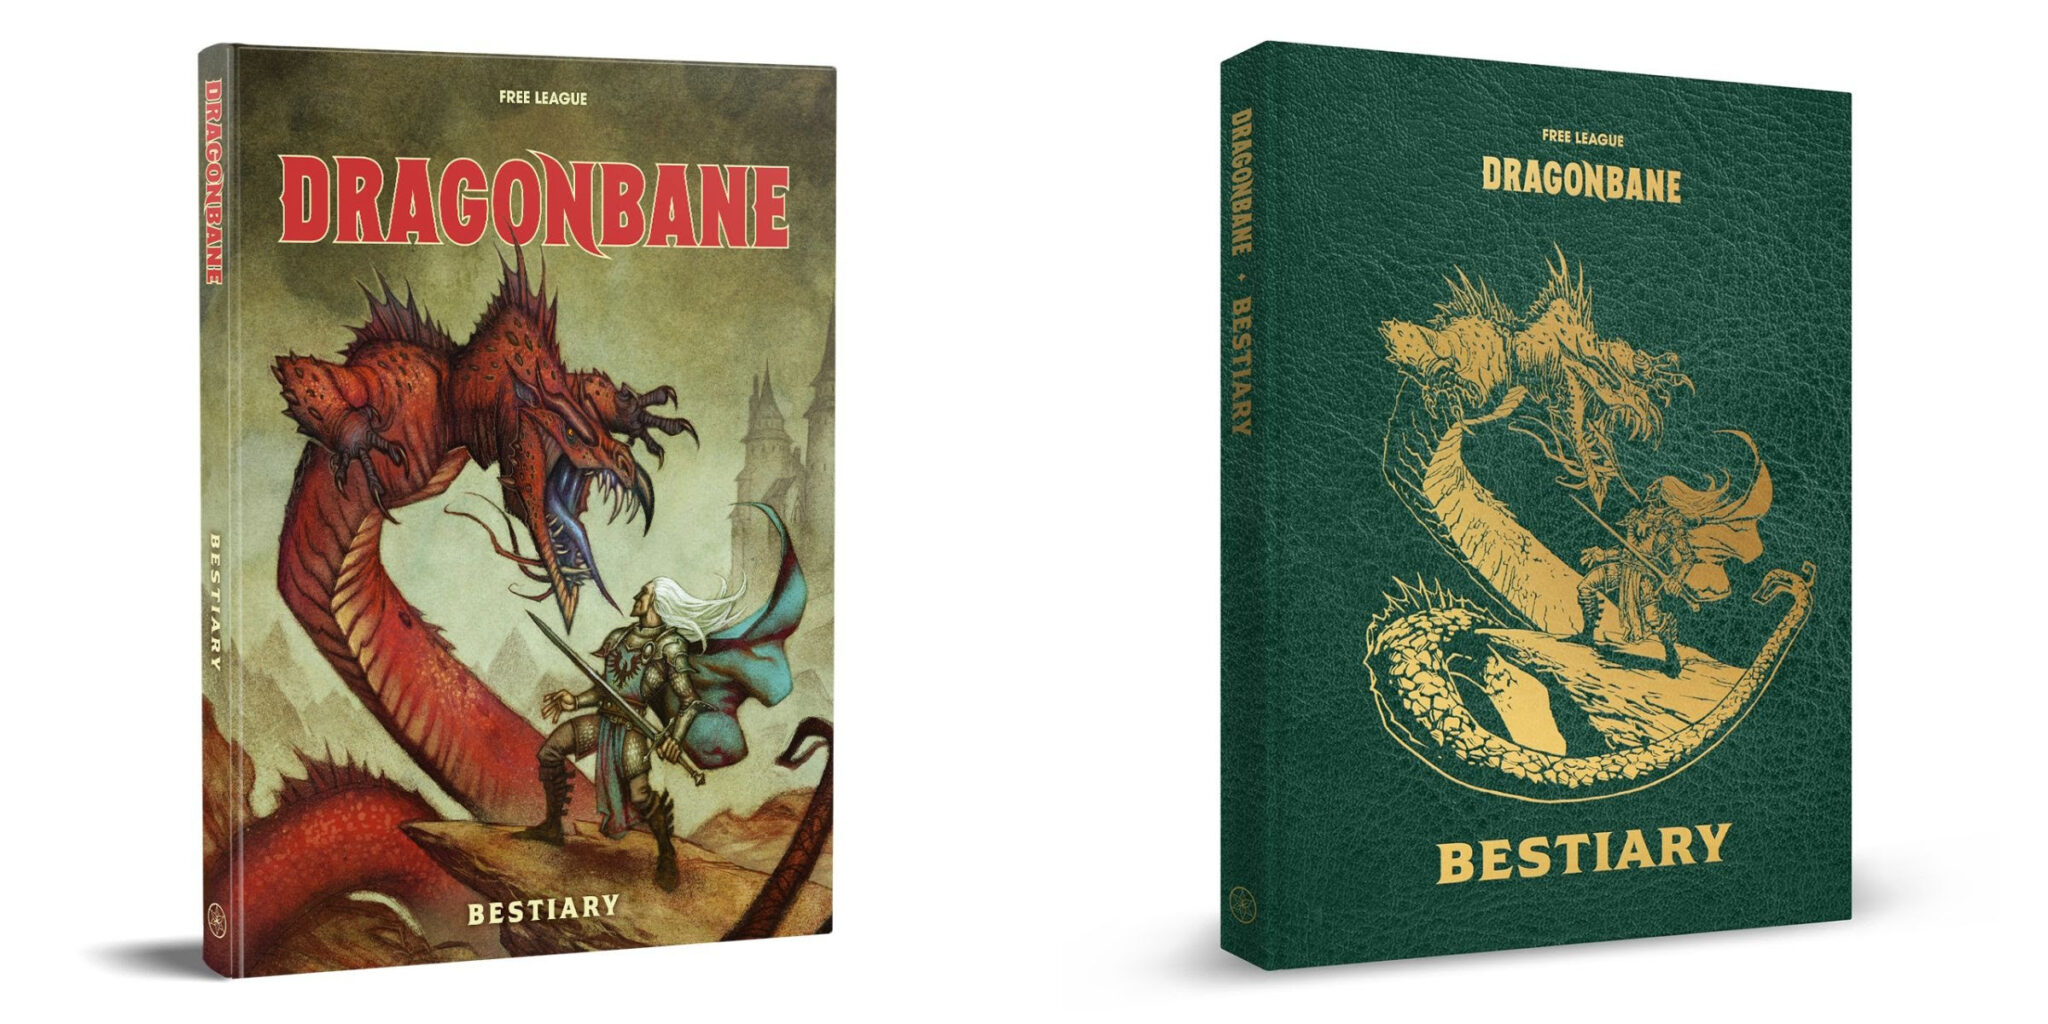 Dragonbane Bestiary covers